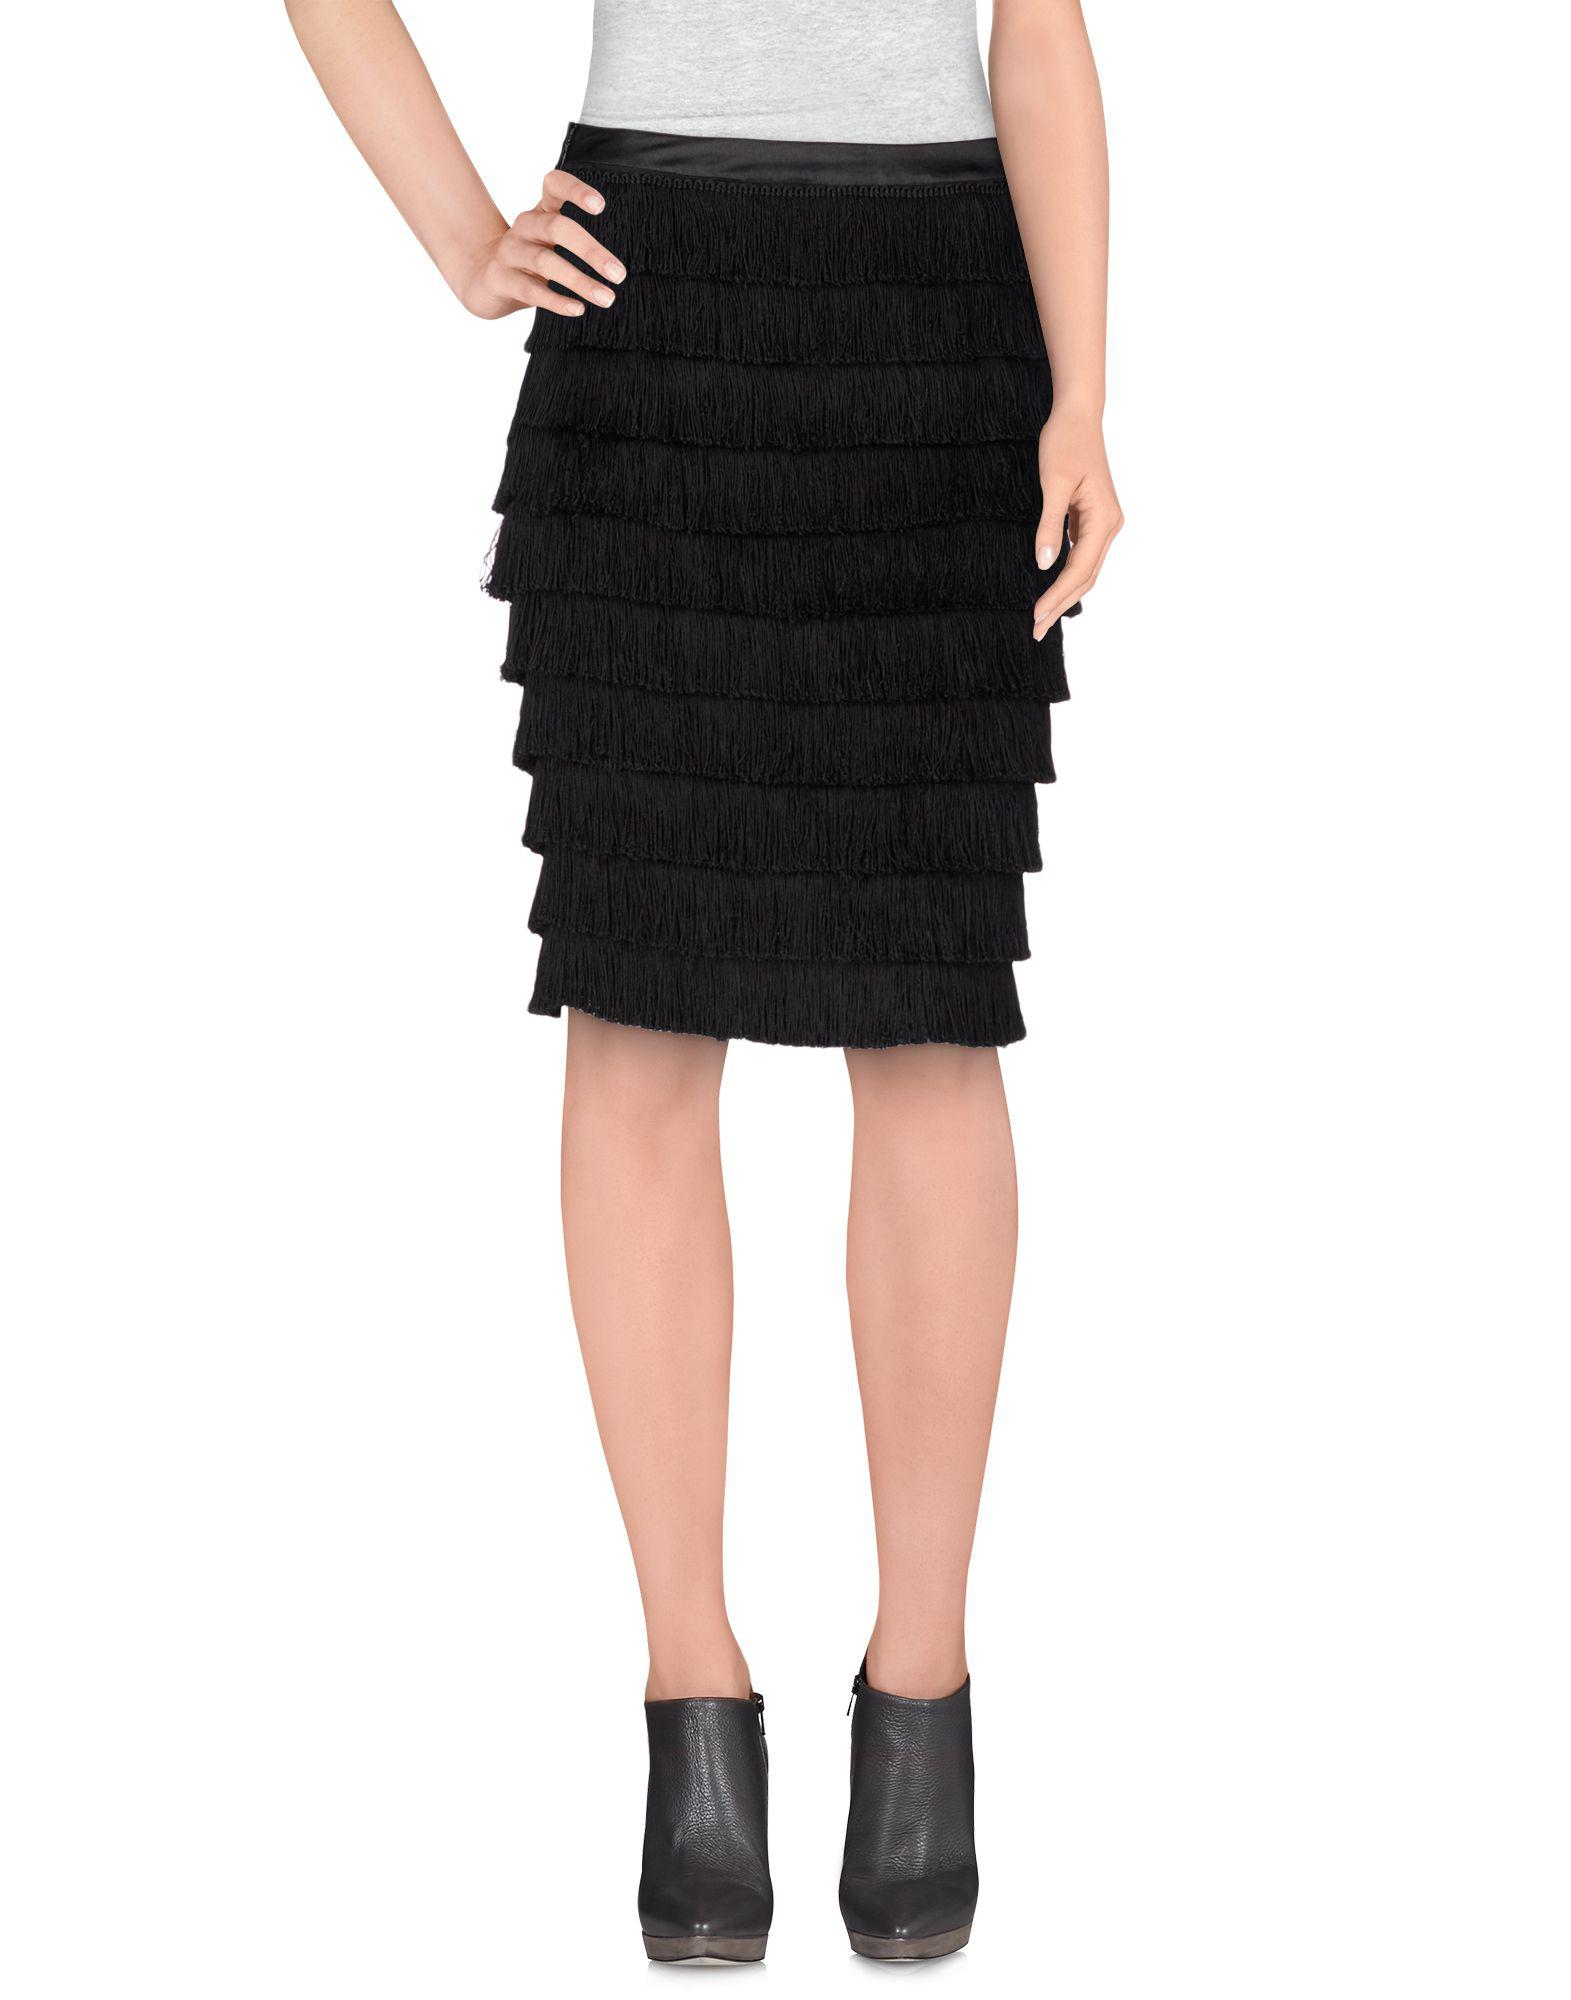 Lyst - Liu Jo Knee Length Skirt in Black